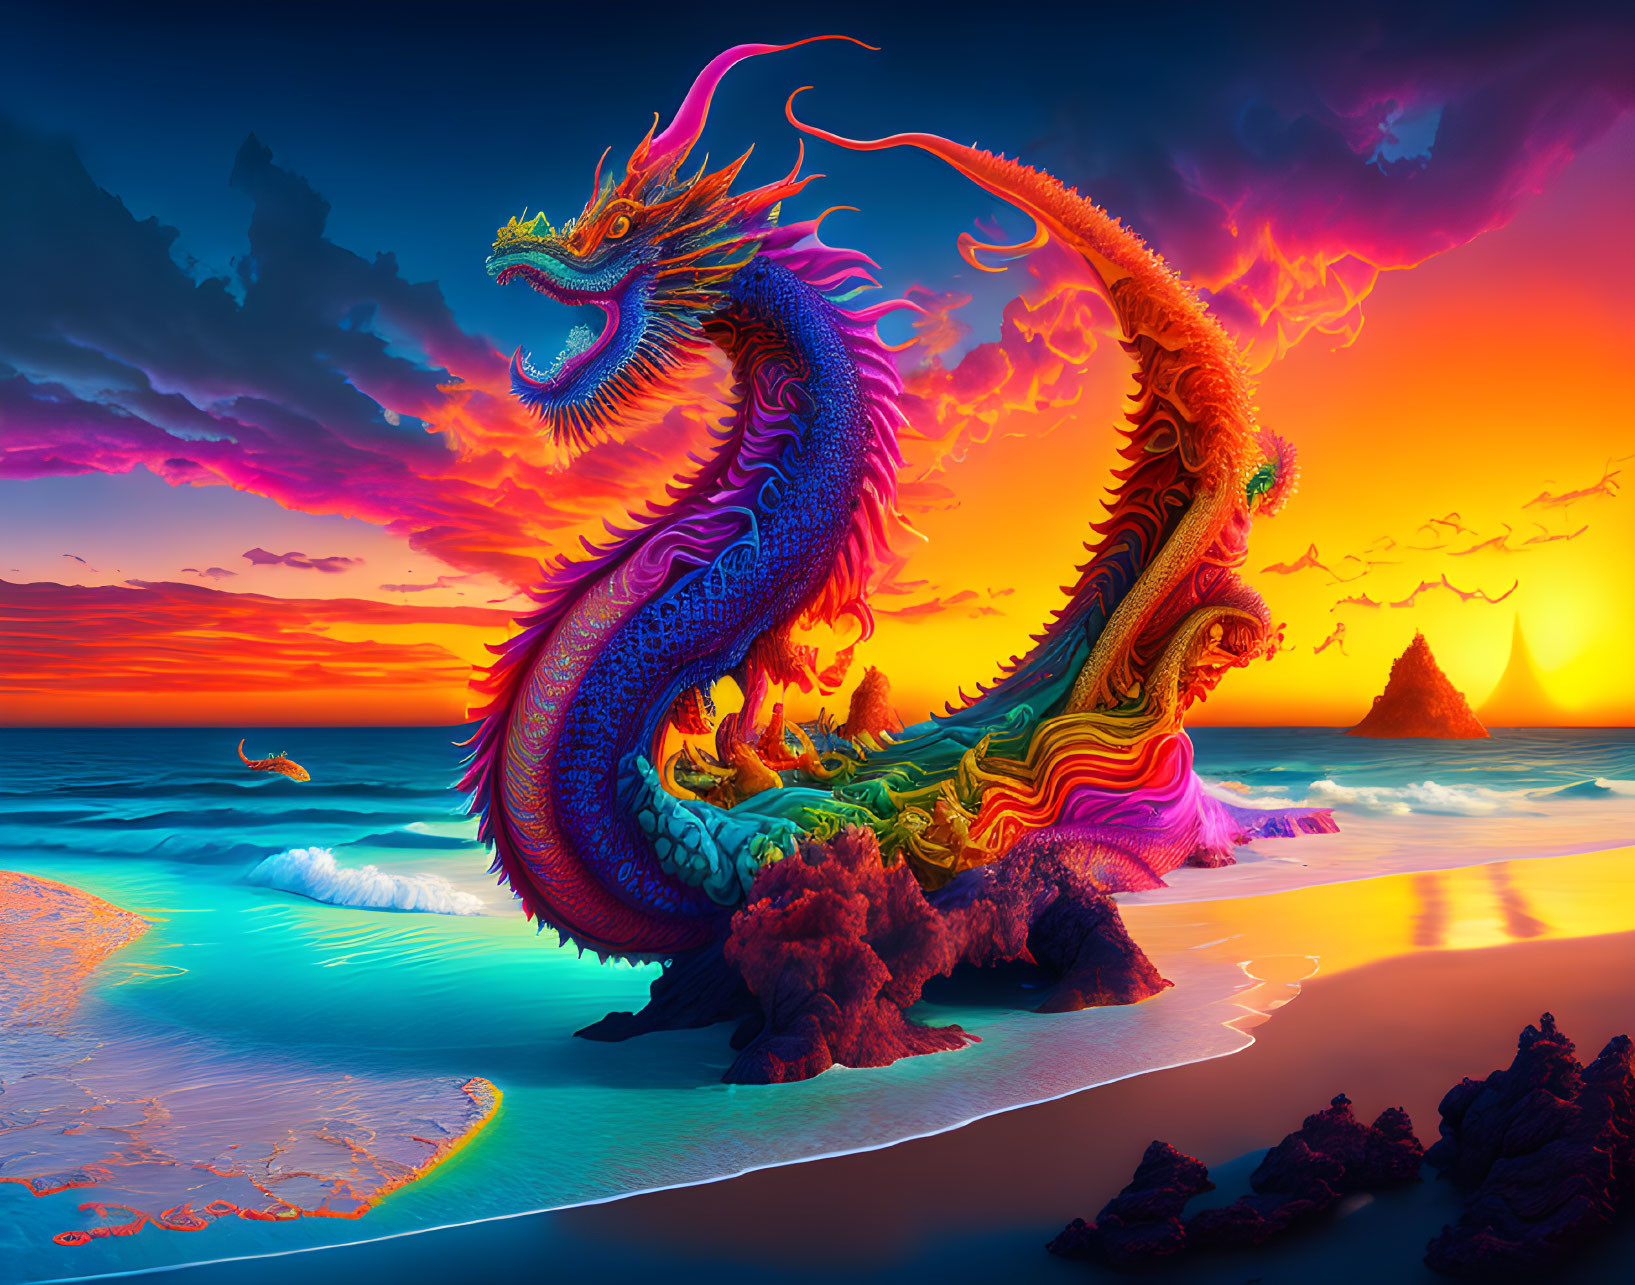 Mythical Dragon Artwork Against Dramatic Sunset Sky